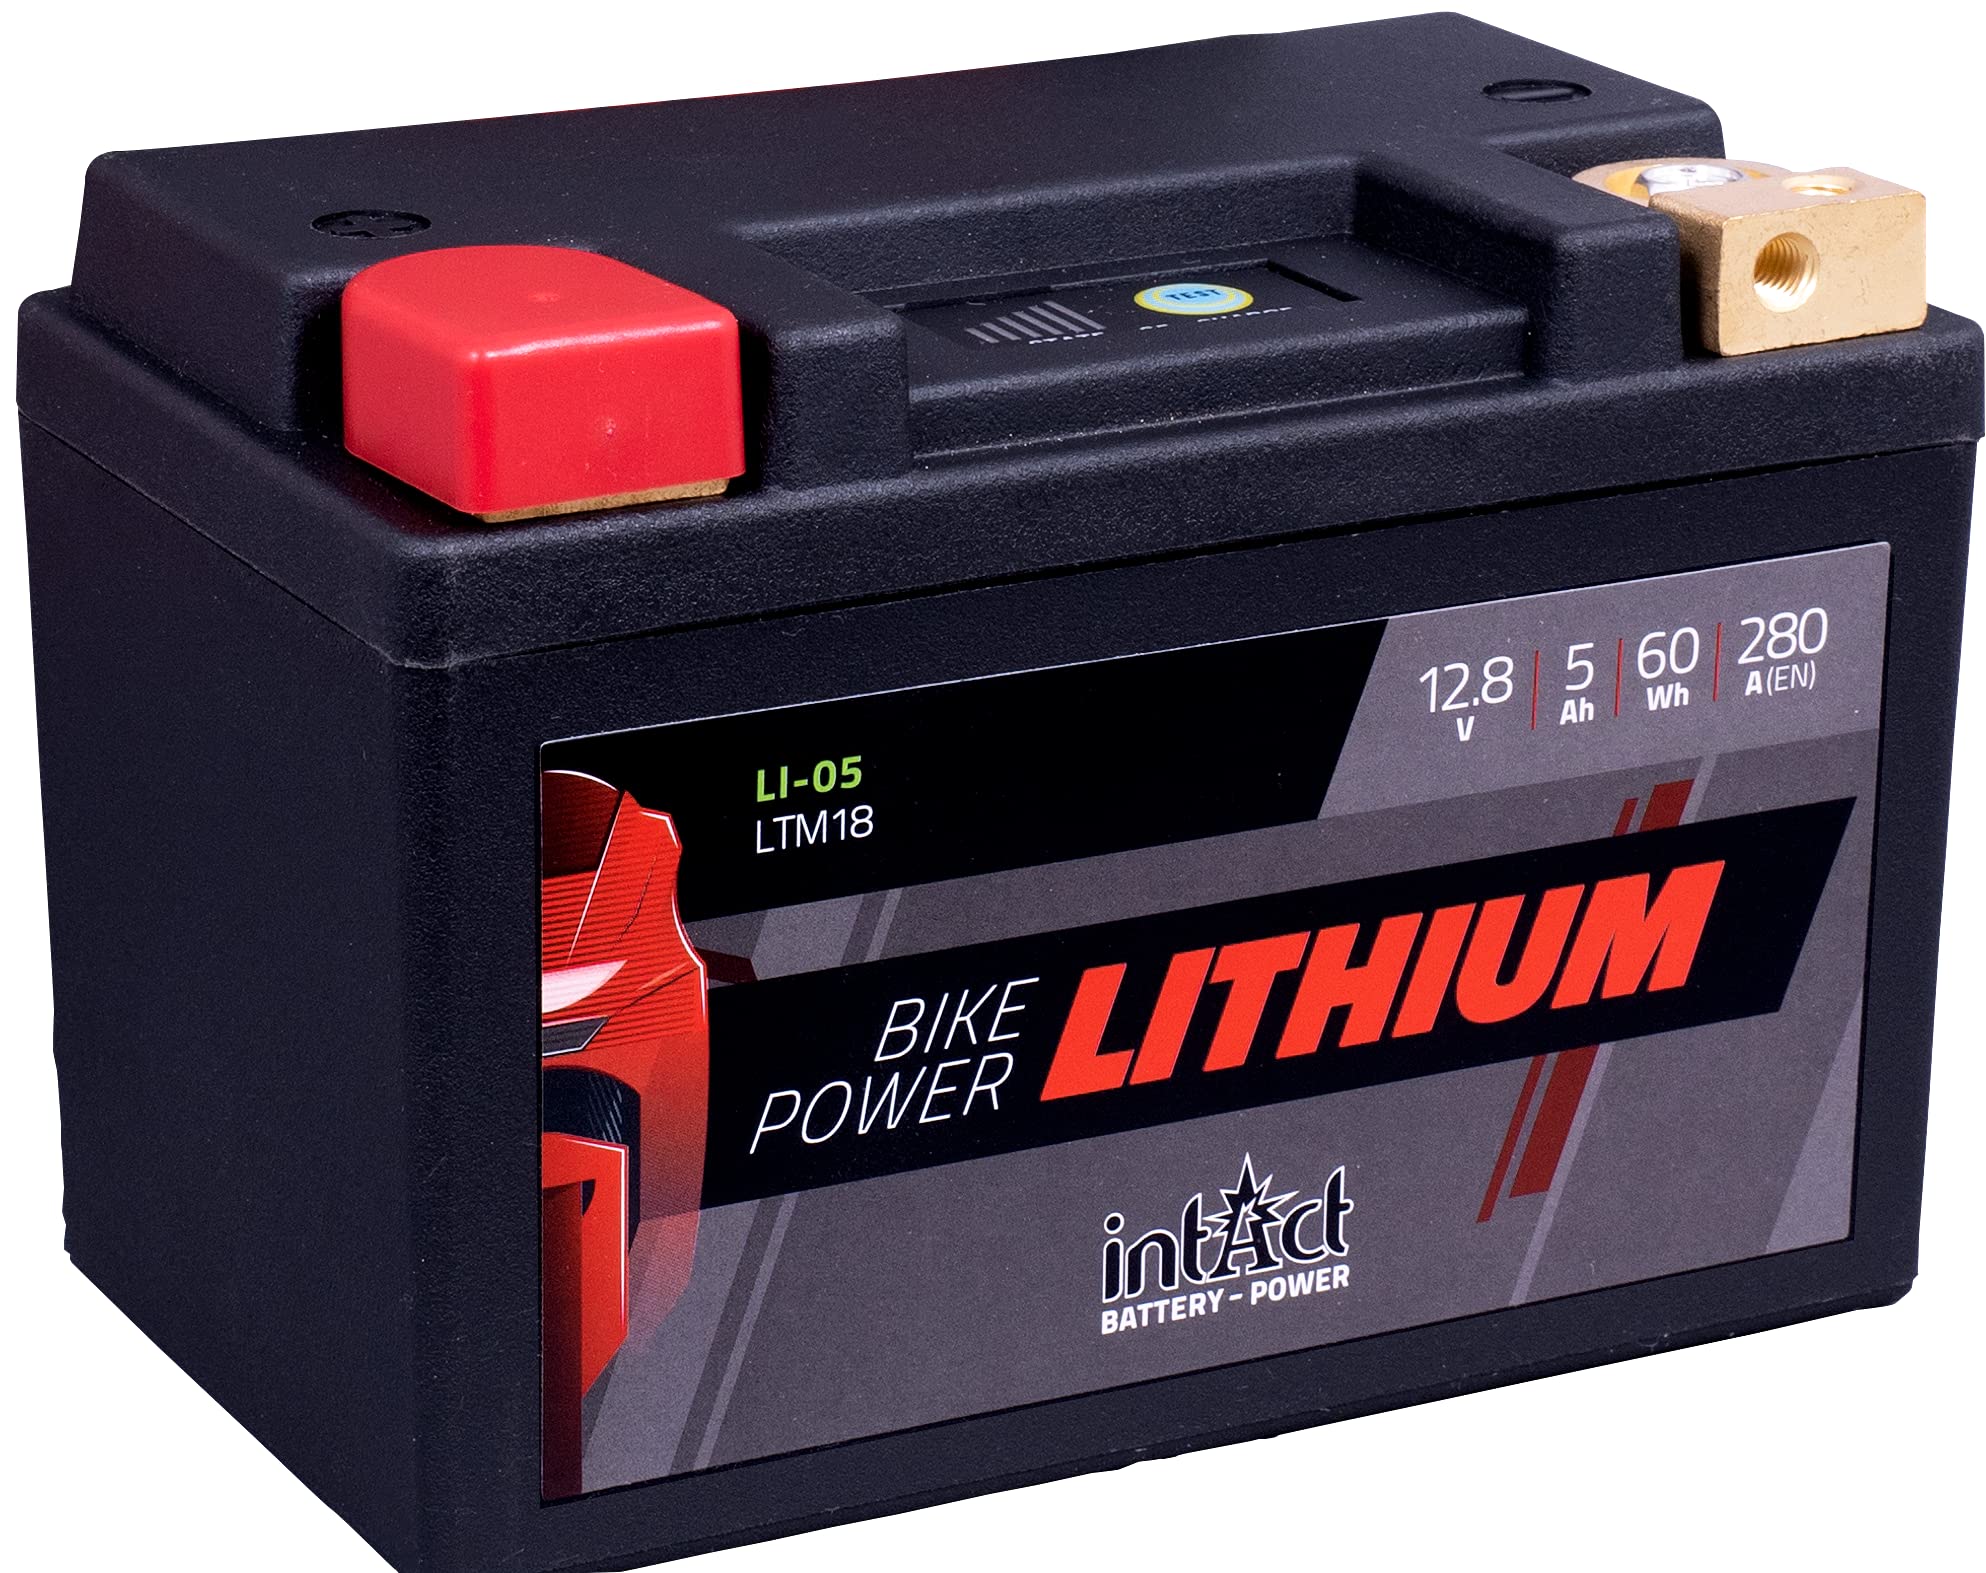 intAct - LITHIUM MOTORRADBATTERIE | Batterie für Roller, Motorrad, Quads uvm. Bis zu 75% Gewichtseinsparung | Bike-Power LI-05, LTM18, 12,8V Batterie, 5 AH (c10), 60 Wh, 280 A (CCA) | Maße: 148x86x105mm